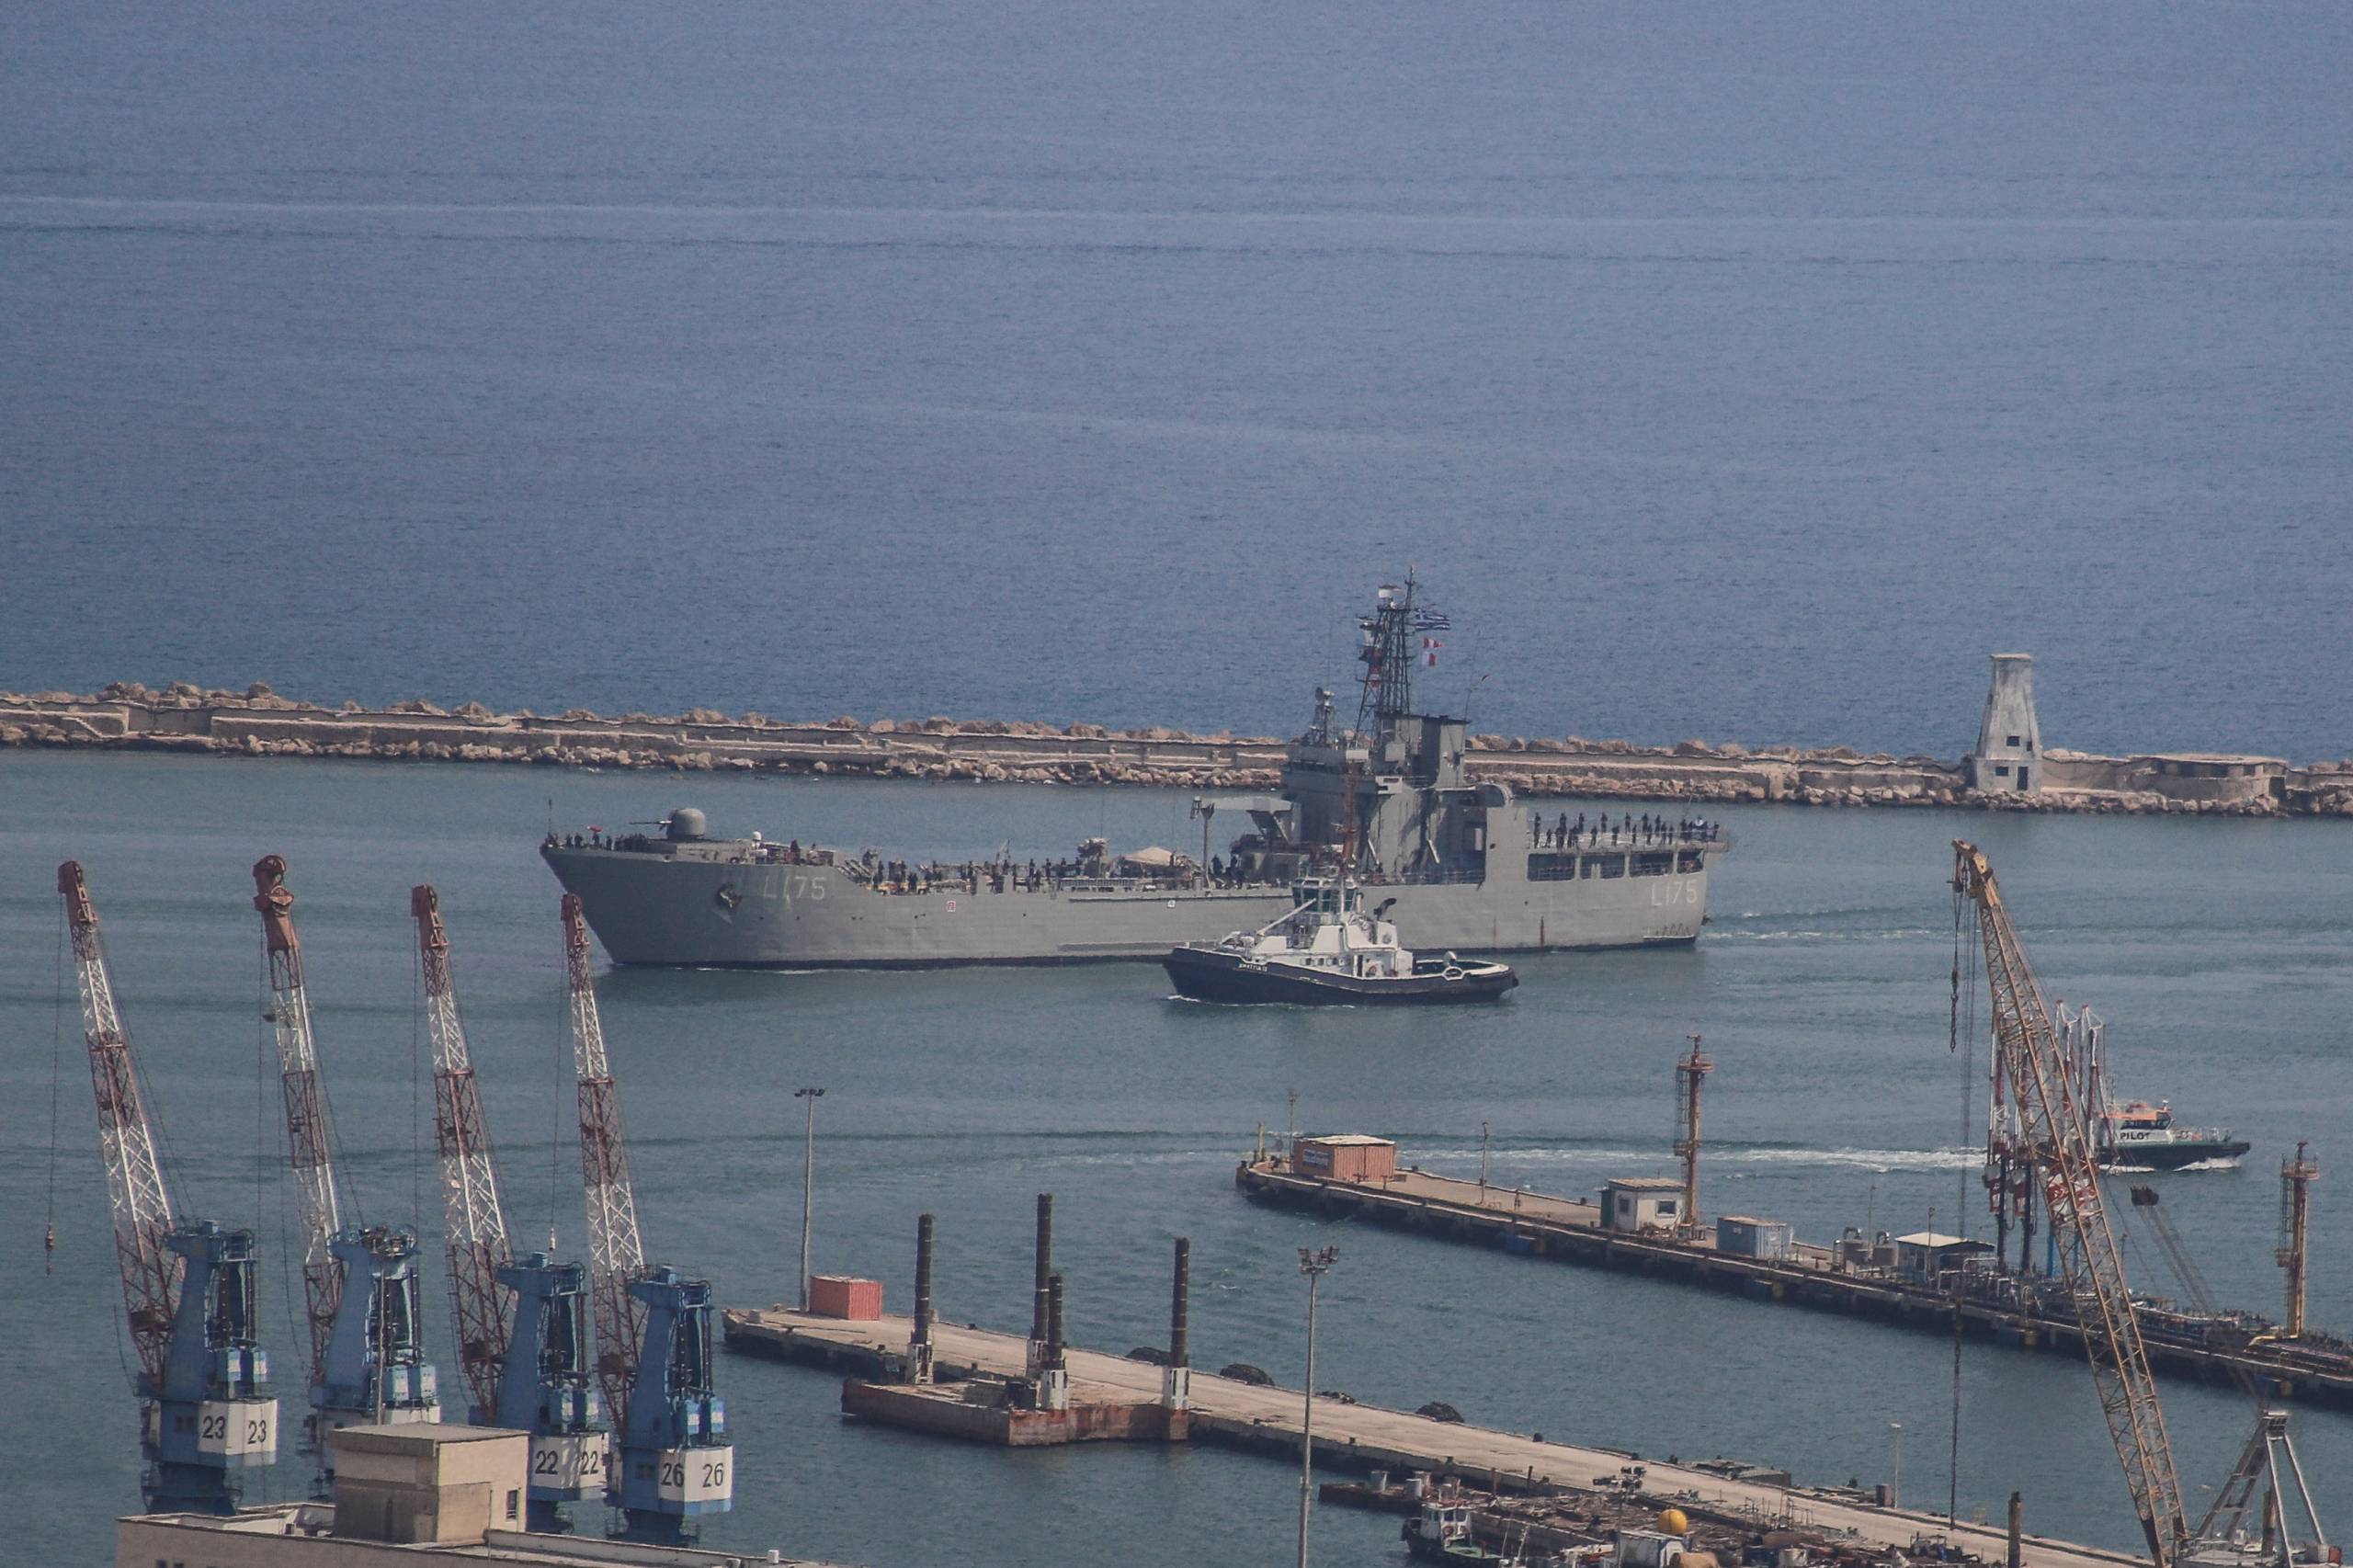 The Helenic Navy Jason-class tank landing ship L-175 embarks in Haifa Port